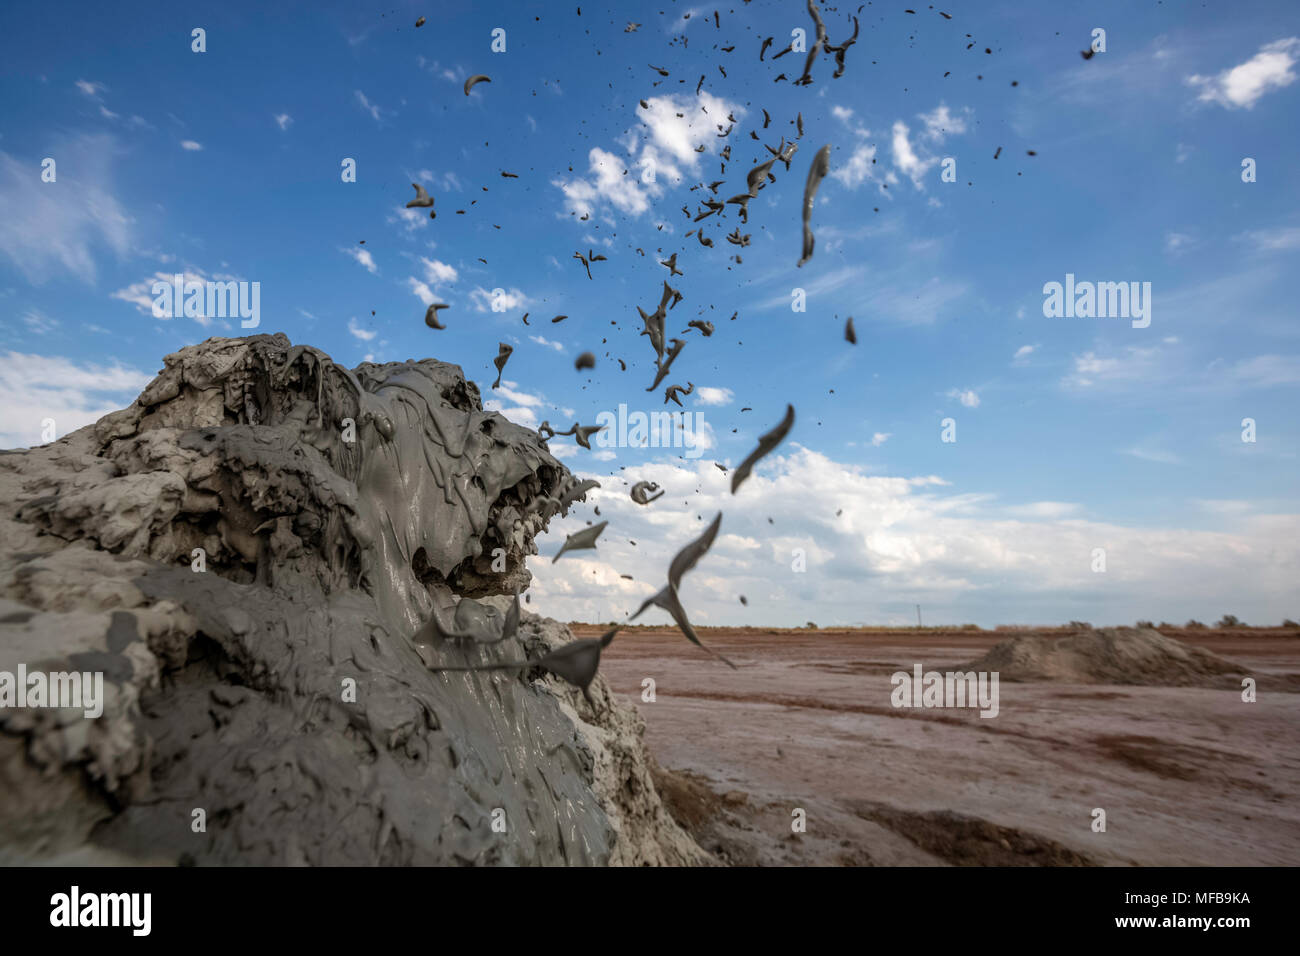 Volcanic mud pots erupting at the Salton Sea Stock Photo